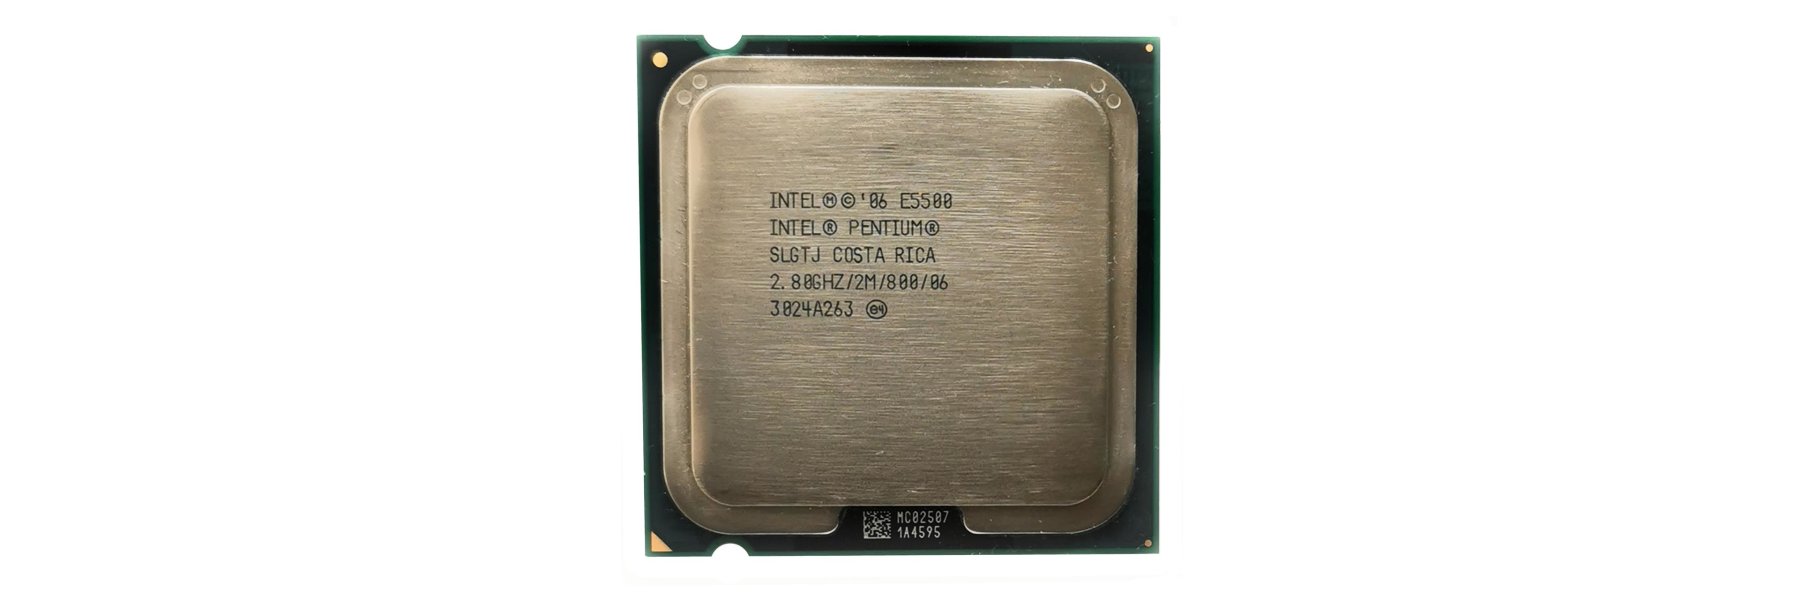 Sockel 775 Pentium Dual Core